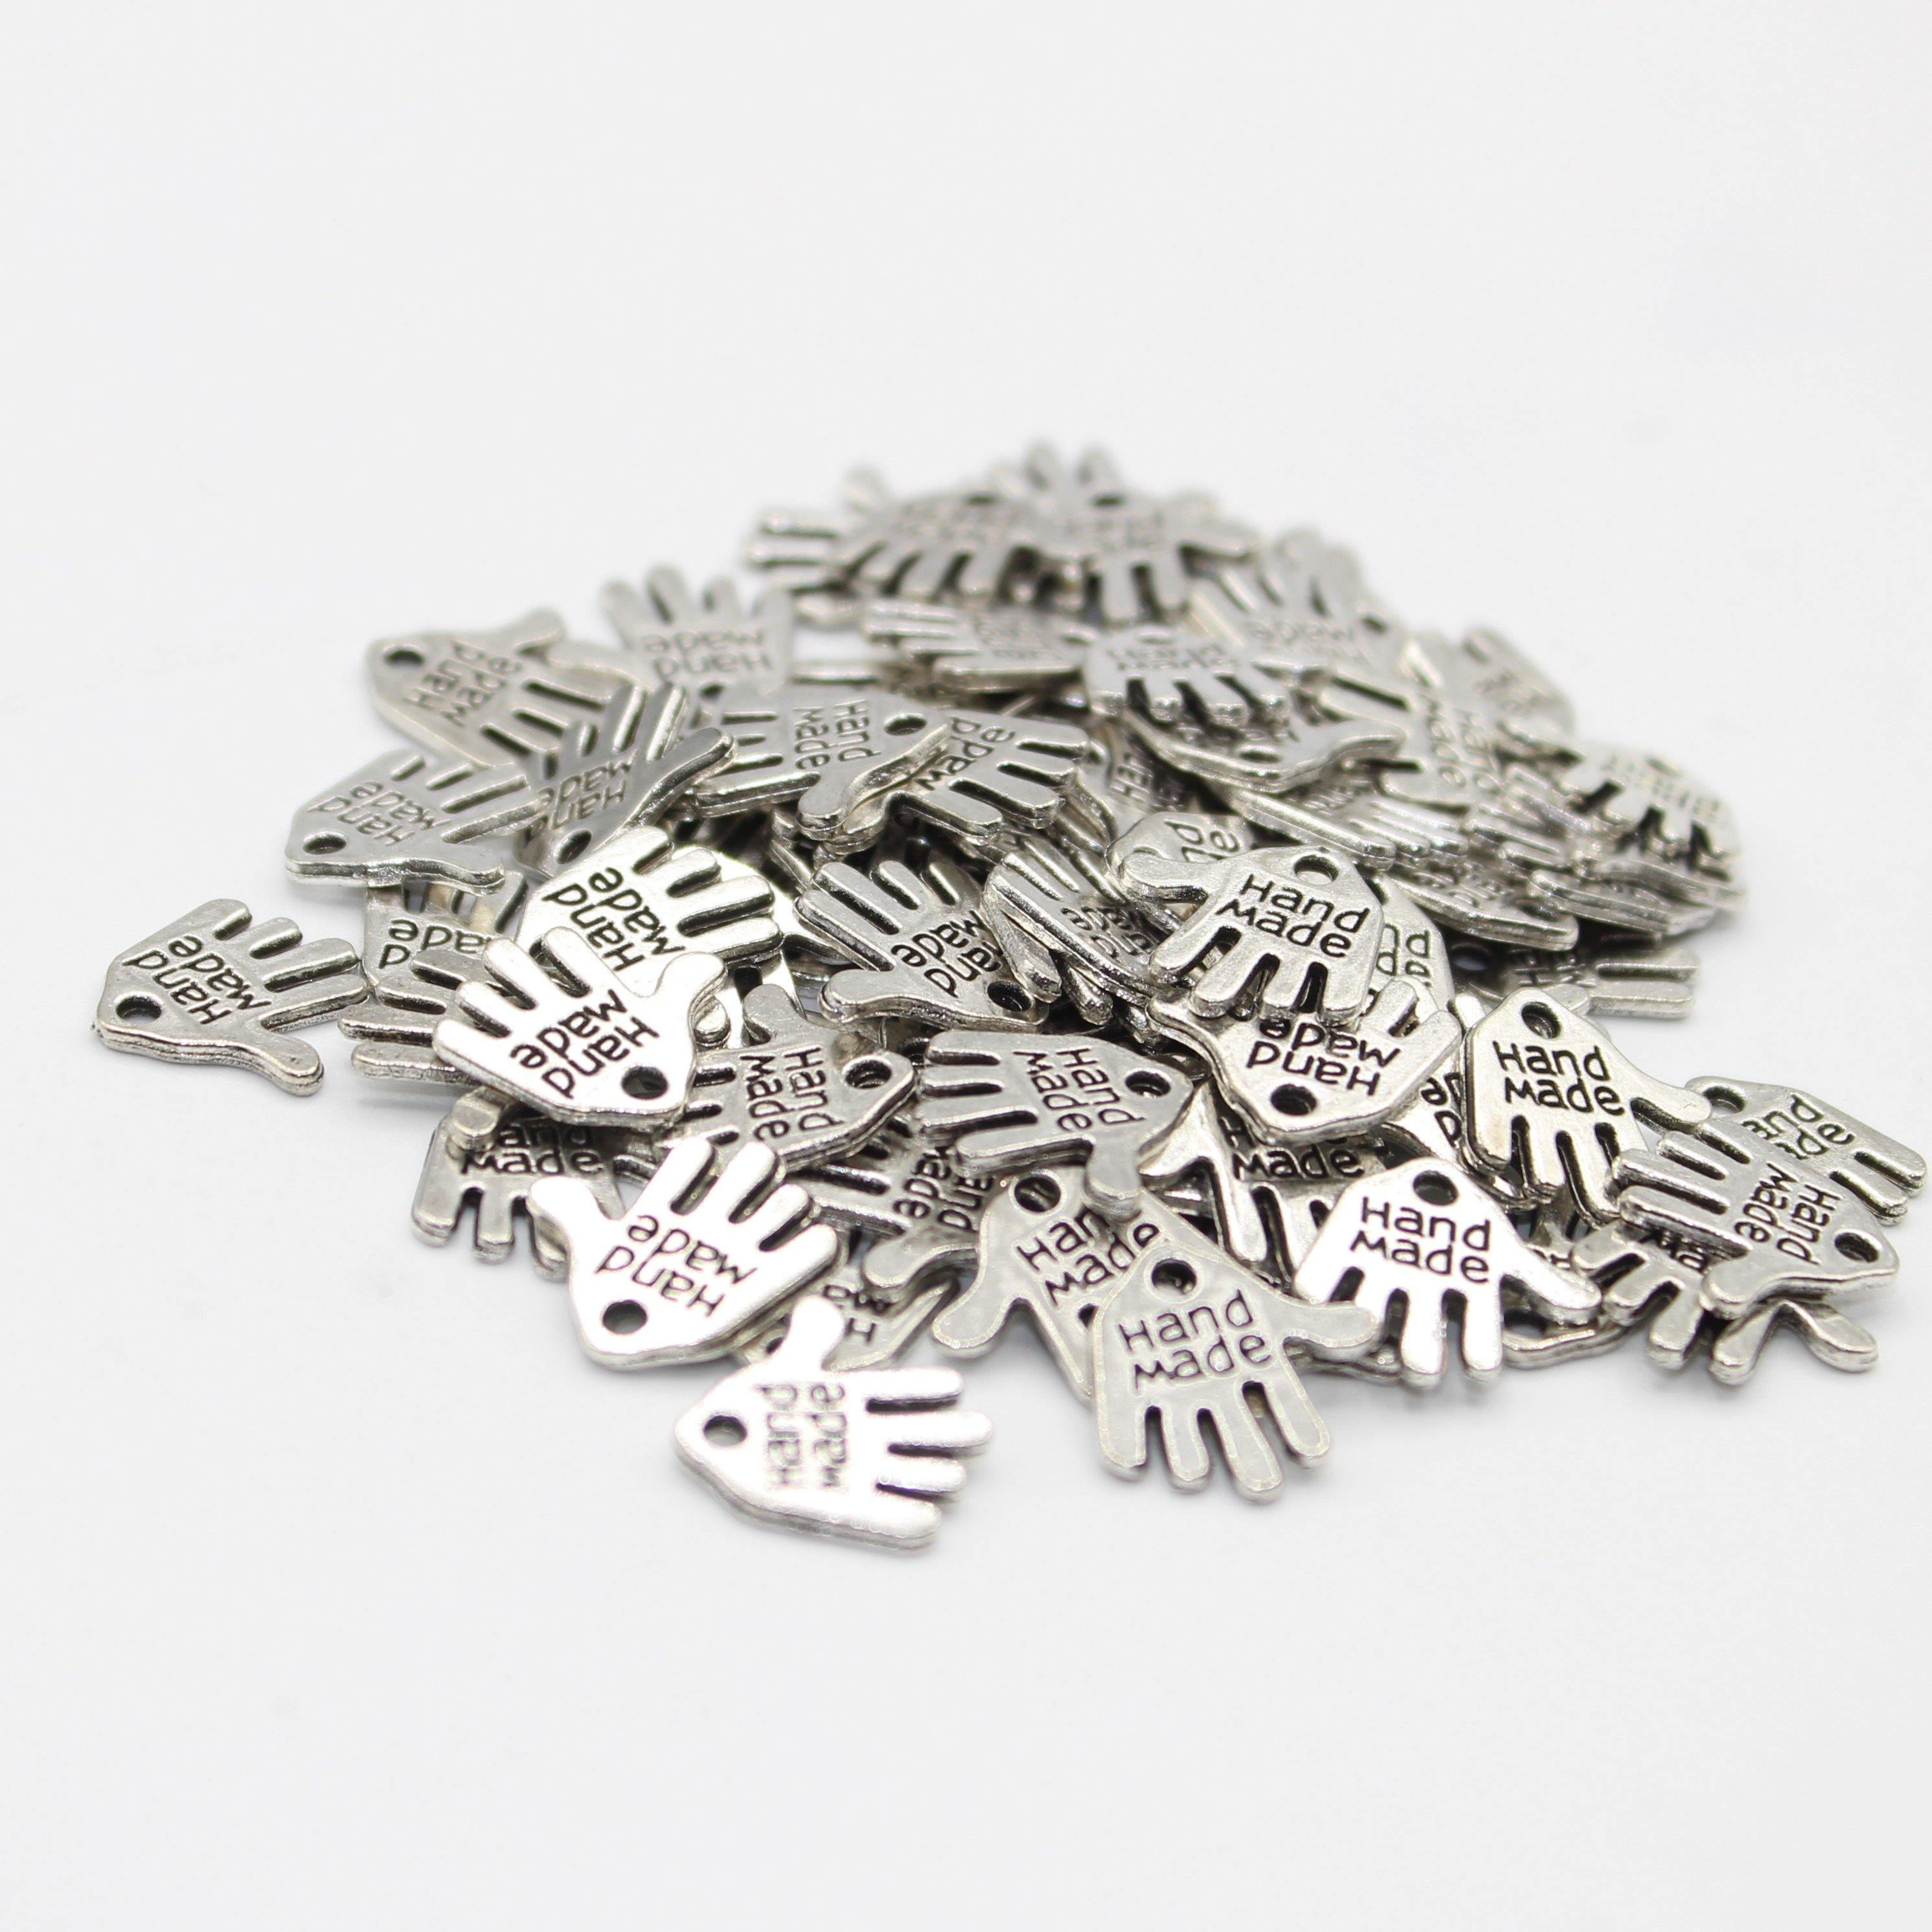 50 pieces "Handmade" Metal Tags - ACCESSOIRES LEDUC